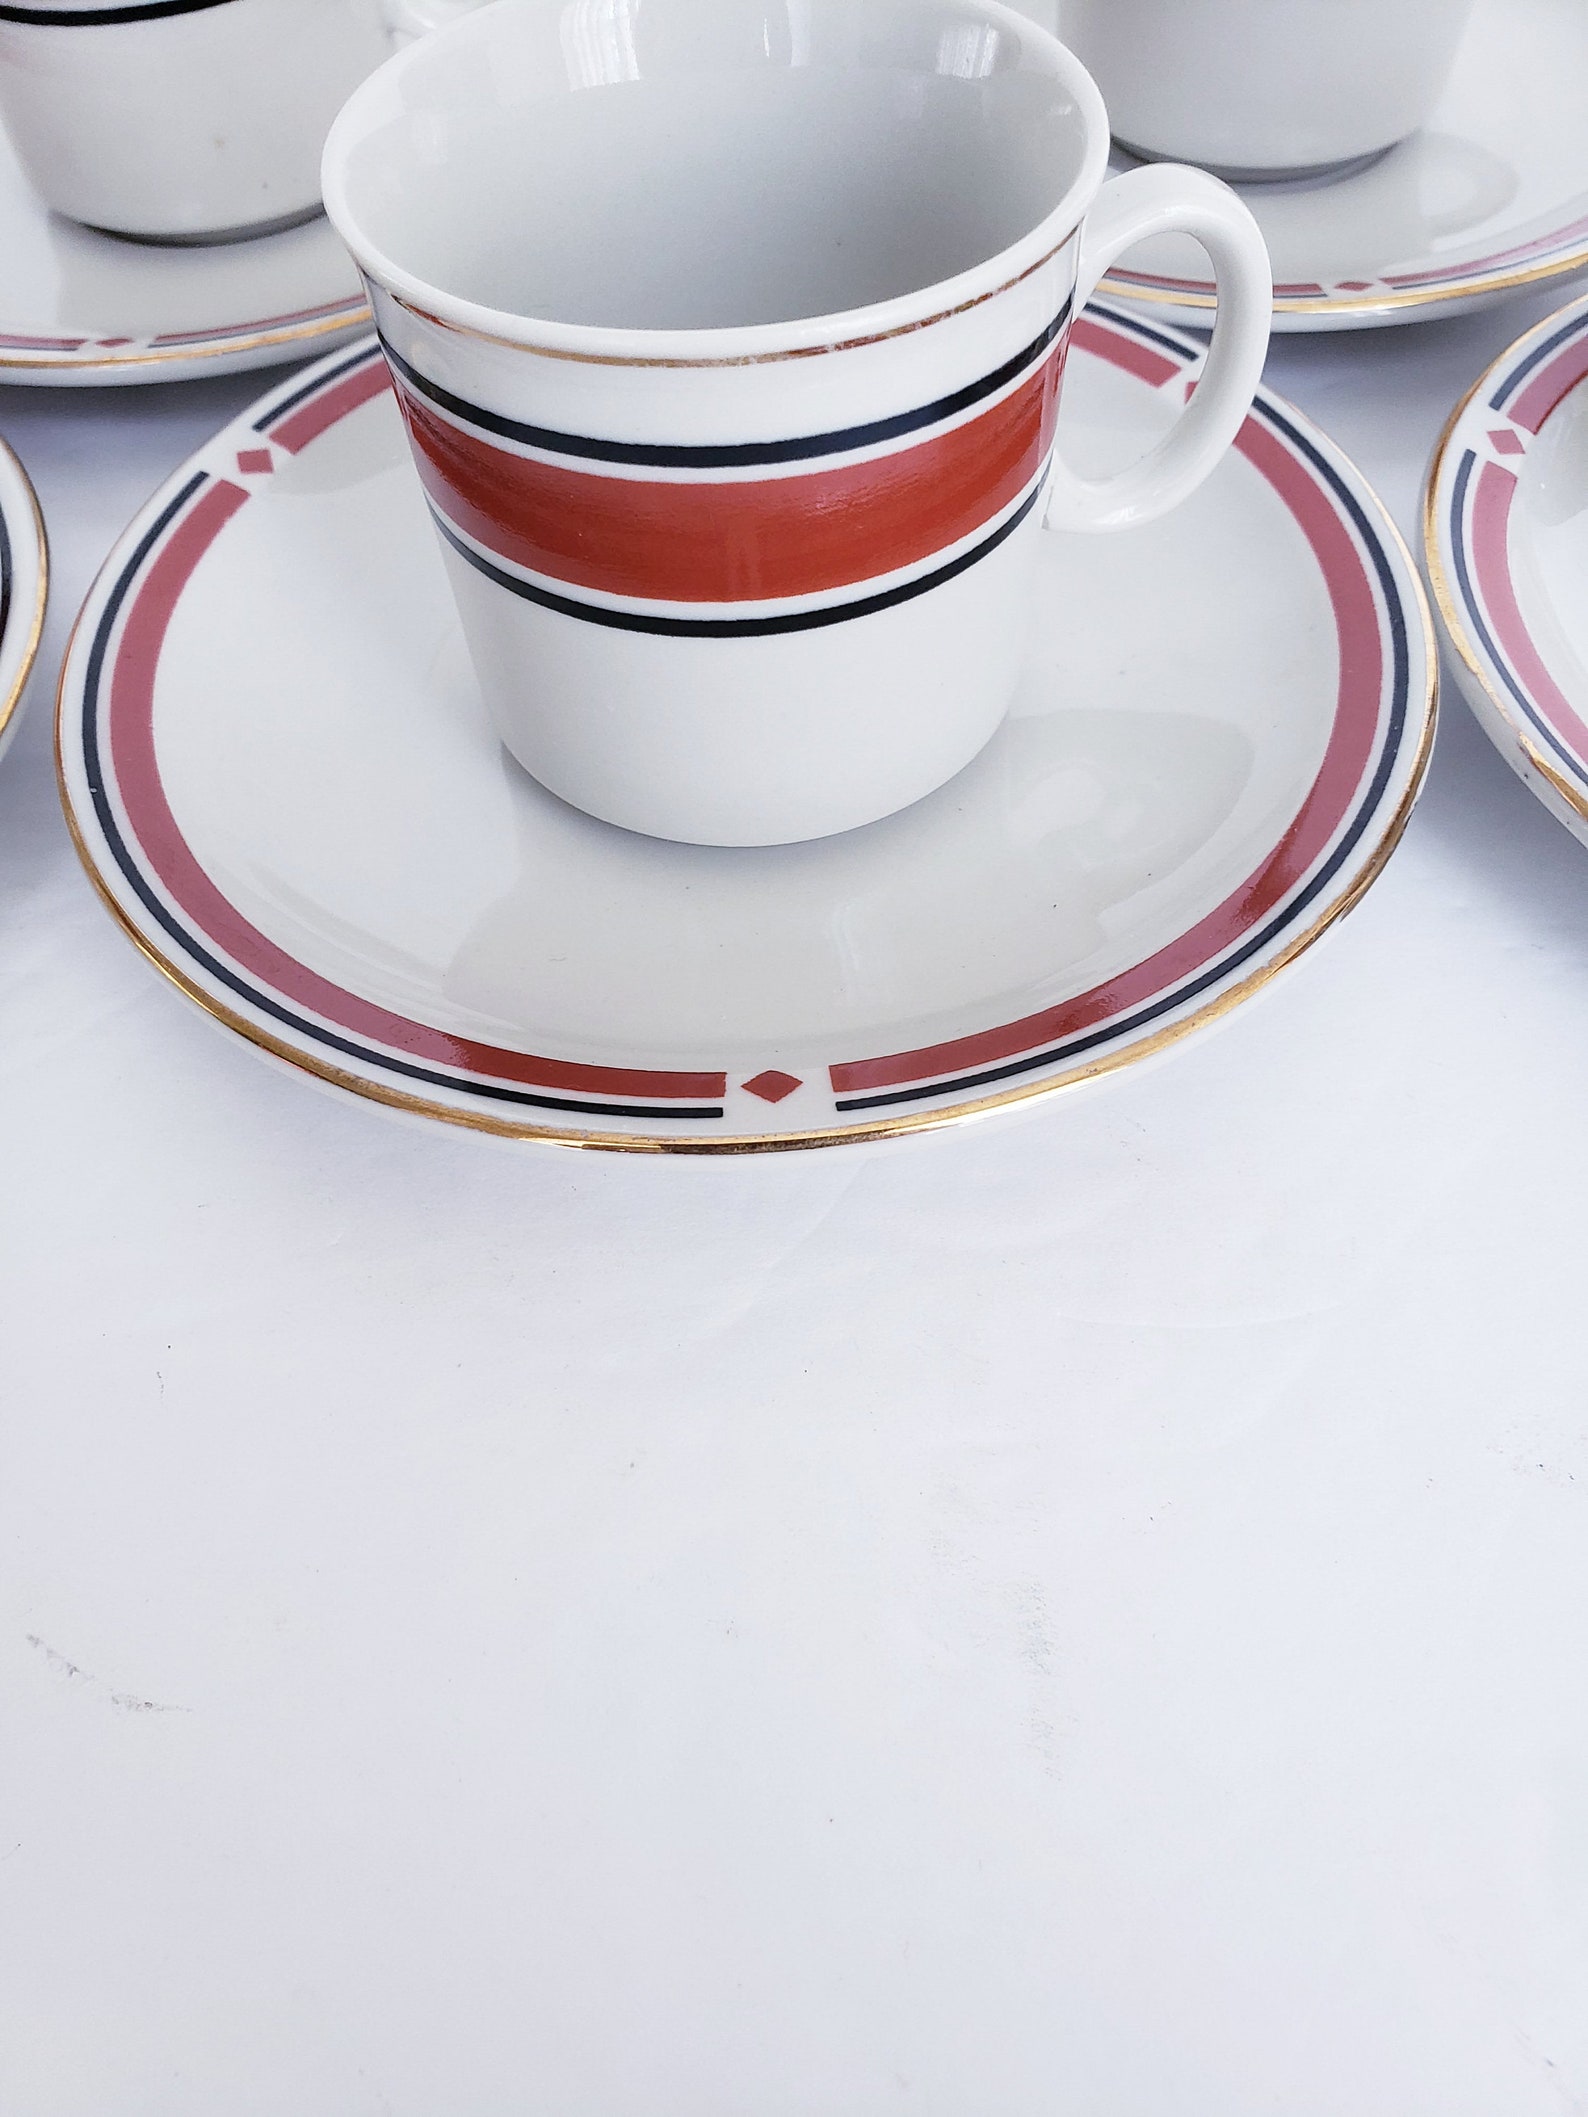 Set of 5 Vintage Kin-Lun Saki/Tea Cups and Saucers Demitasse | Etsy